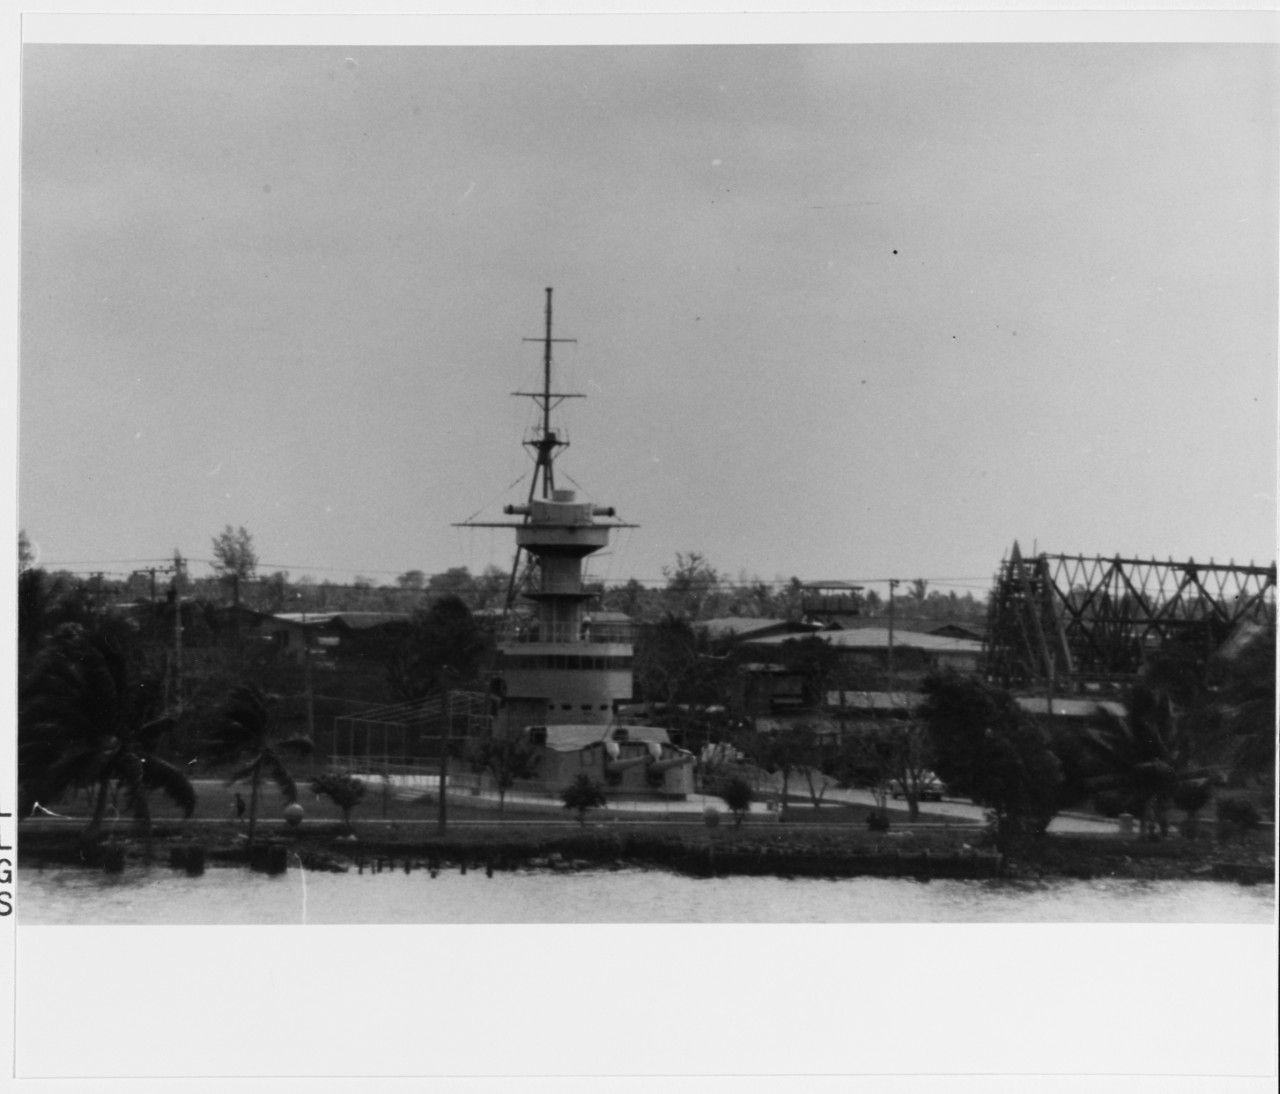 DHONBURI (Thai coast defense ship, 1938-1967)